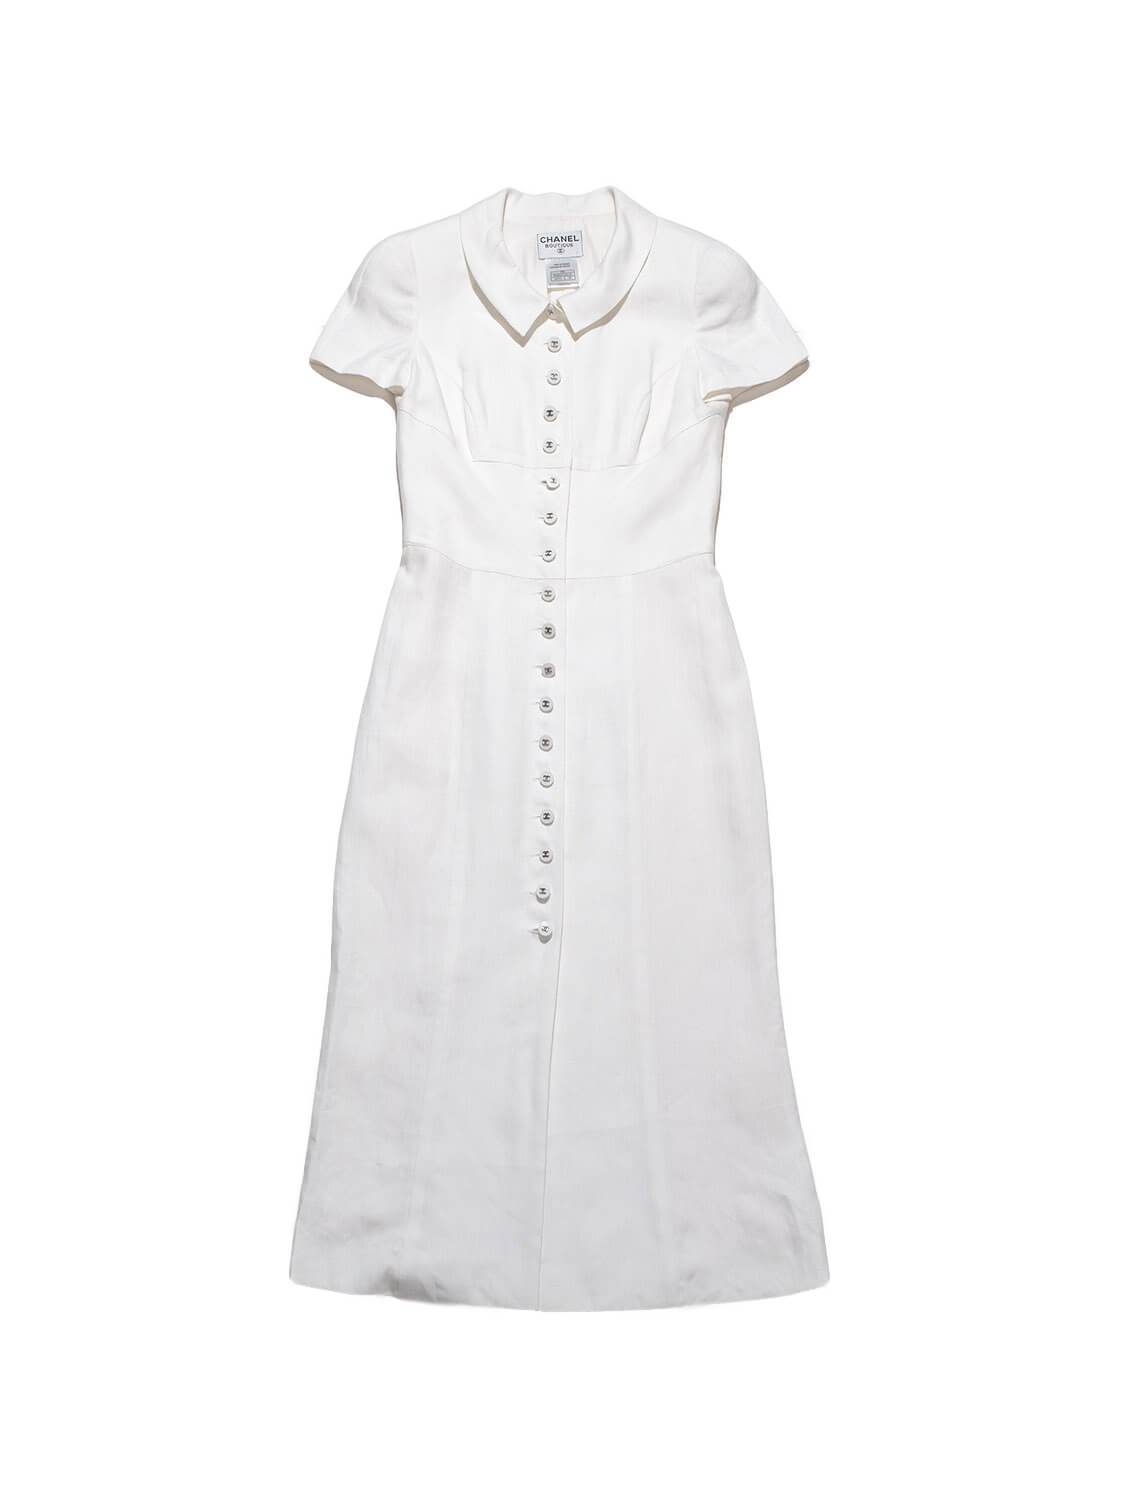 CHANEL Linen Button Down Dress White-designer resale